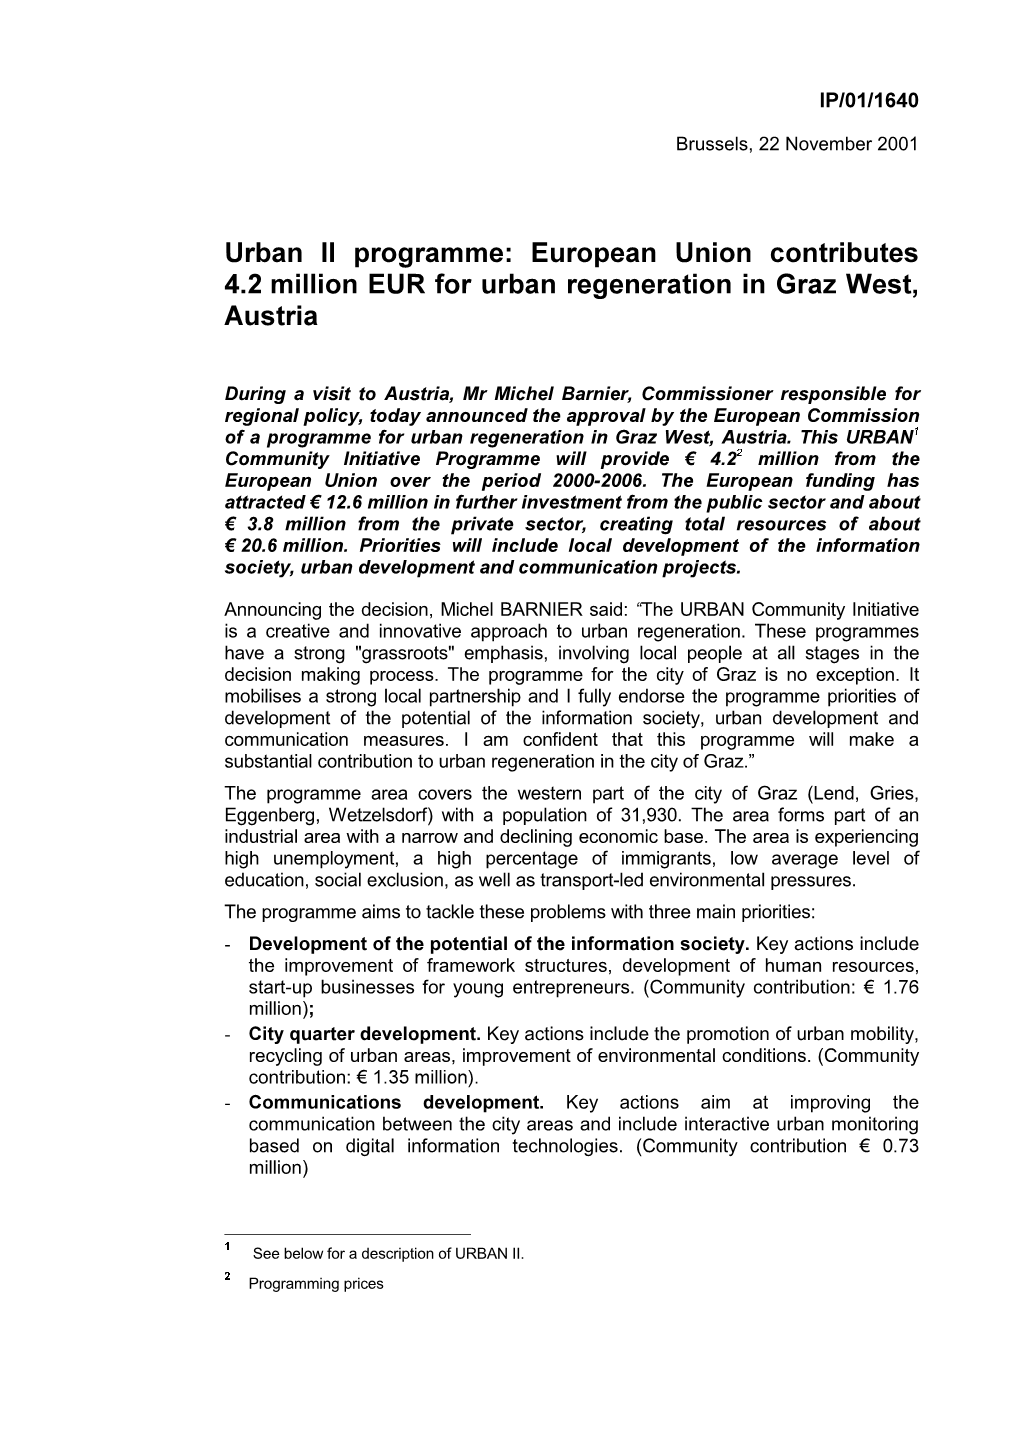 European Union Contributes 4.2 Million EUR for Urban Regeneration